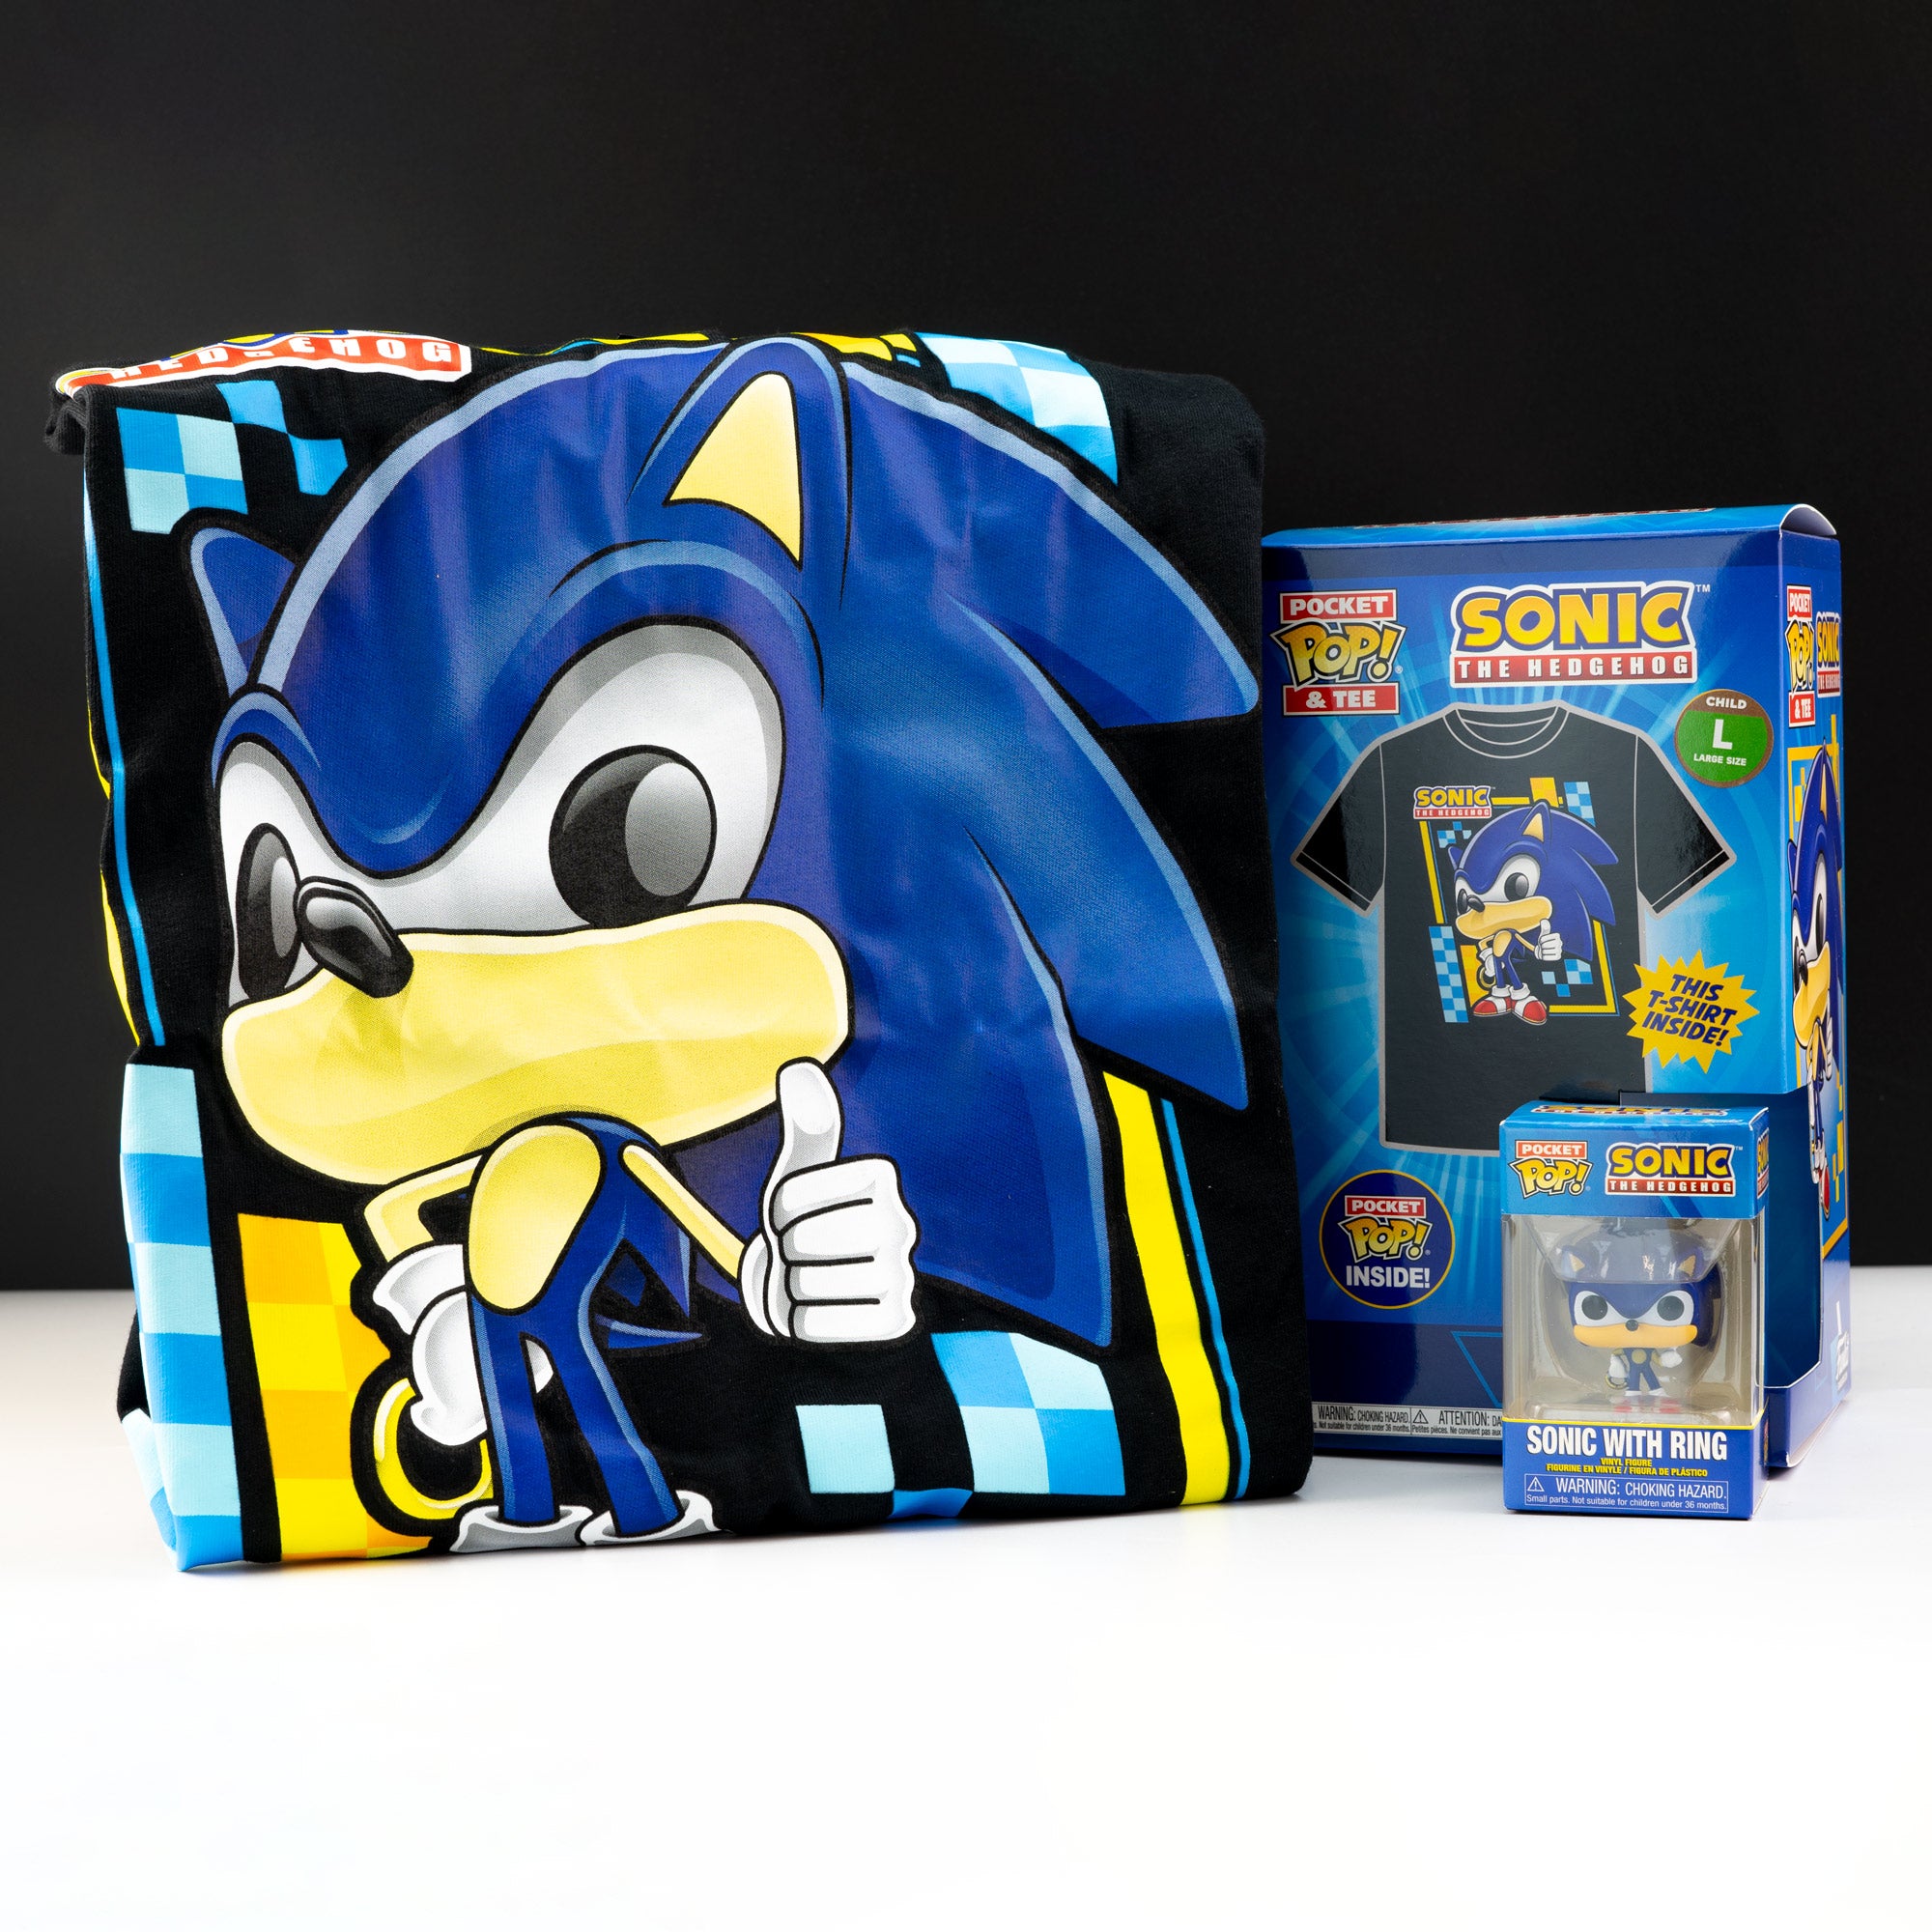 Sega Sonic the Hedgehog with Ring Pocket Pop! Vinyl and Tee Set for Kids